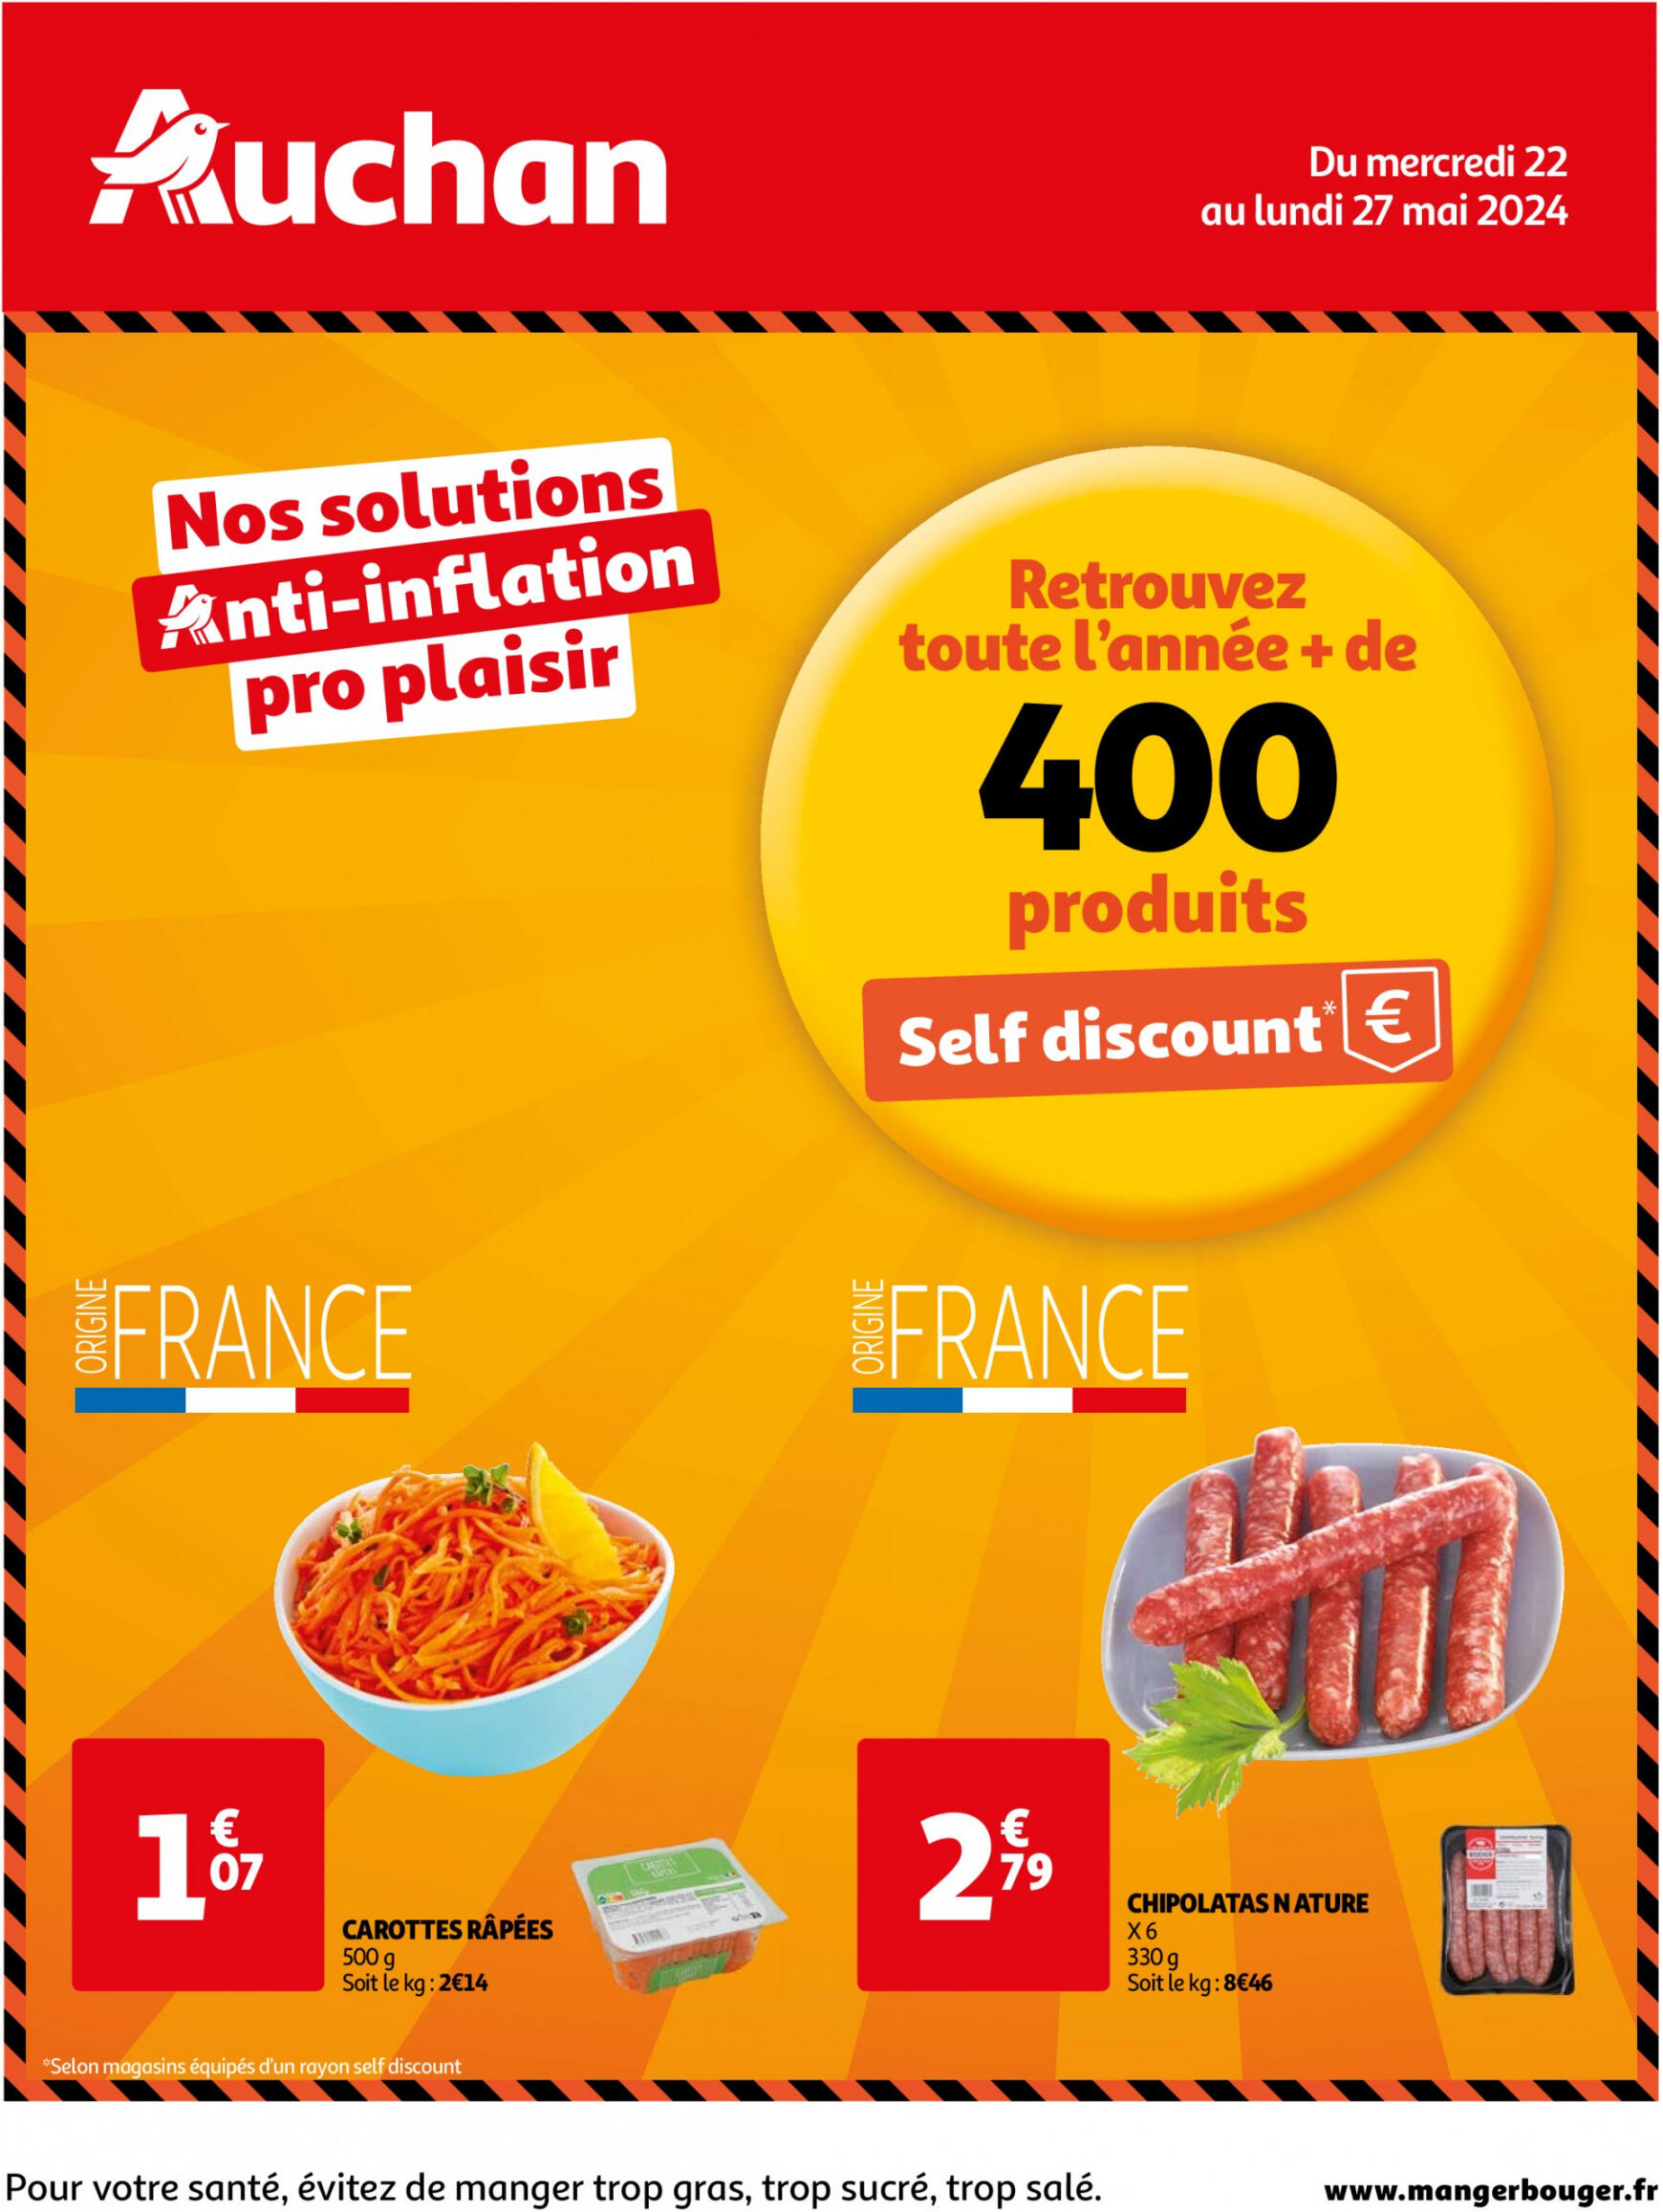 auchan - Auchan - Nos solutions anti-inflation pro plaisir folder huidig 22.05. - 27.05.